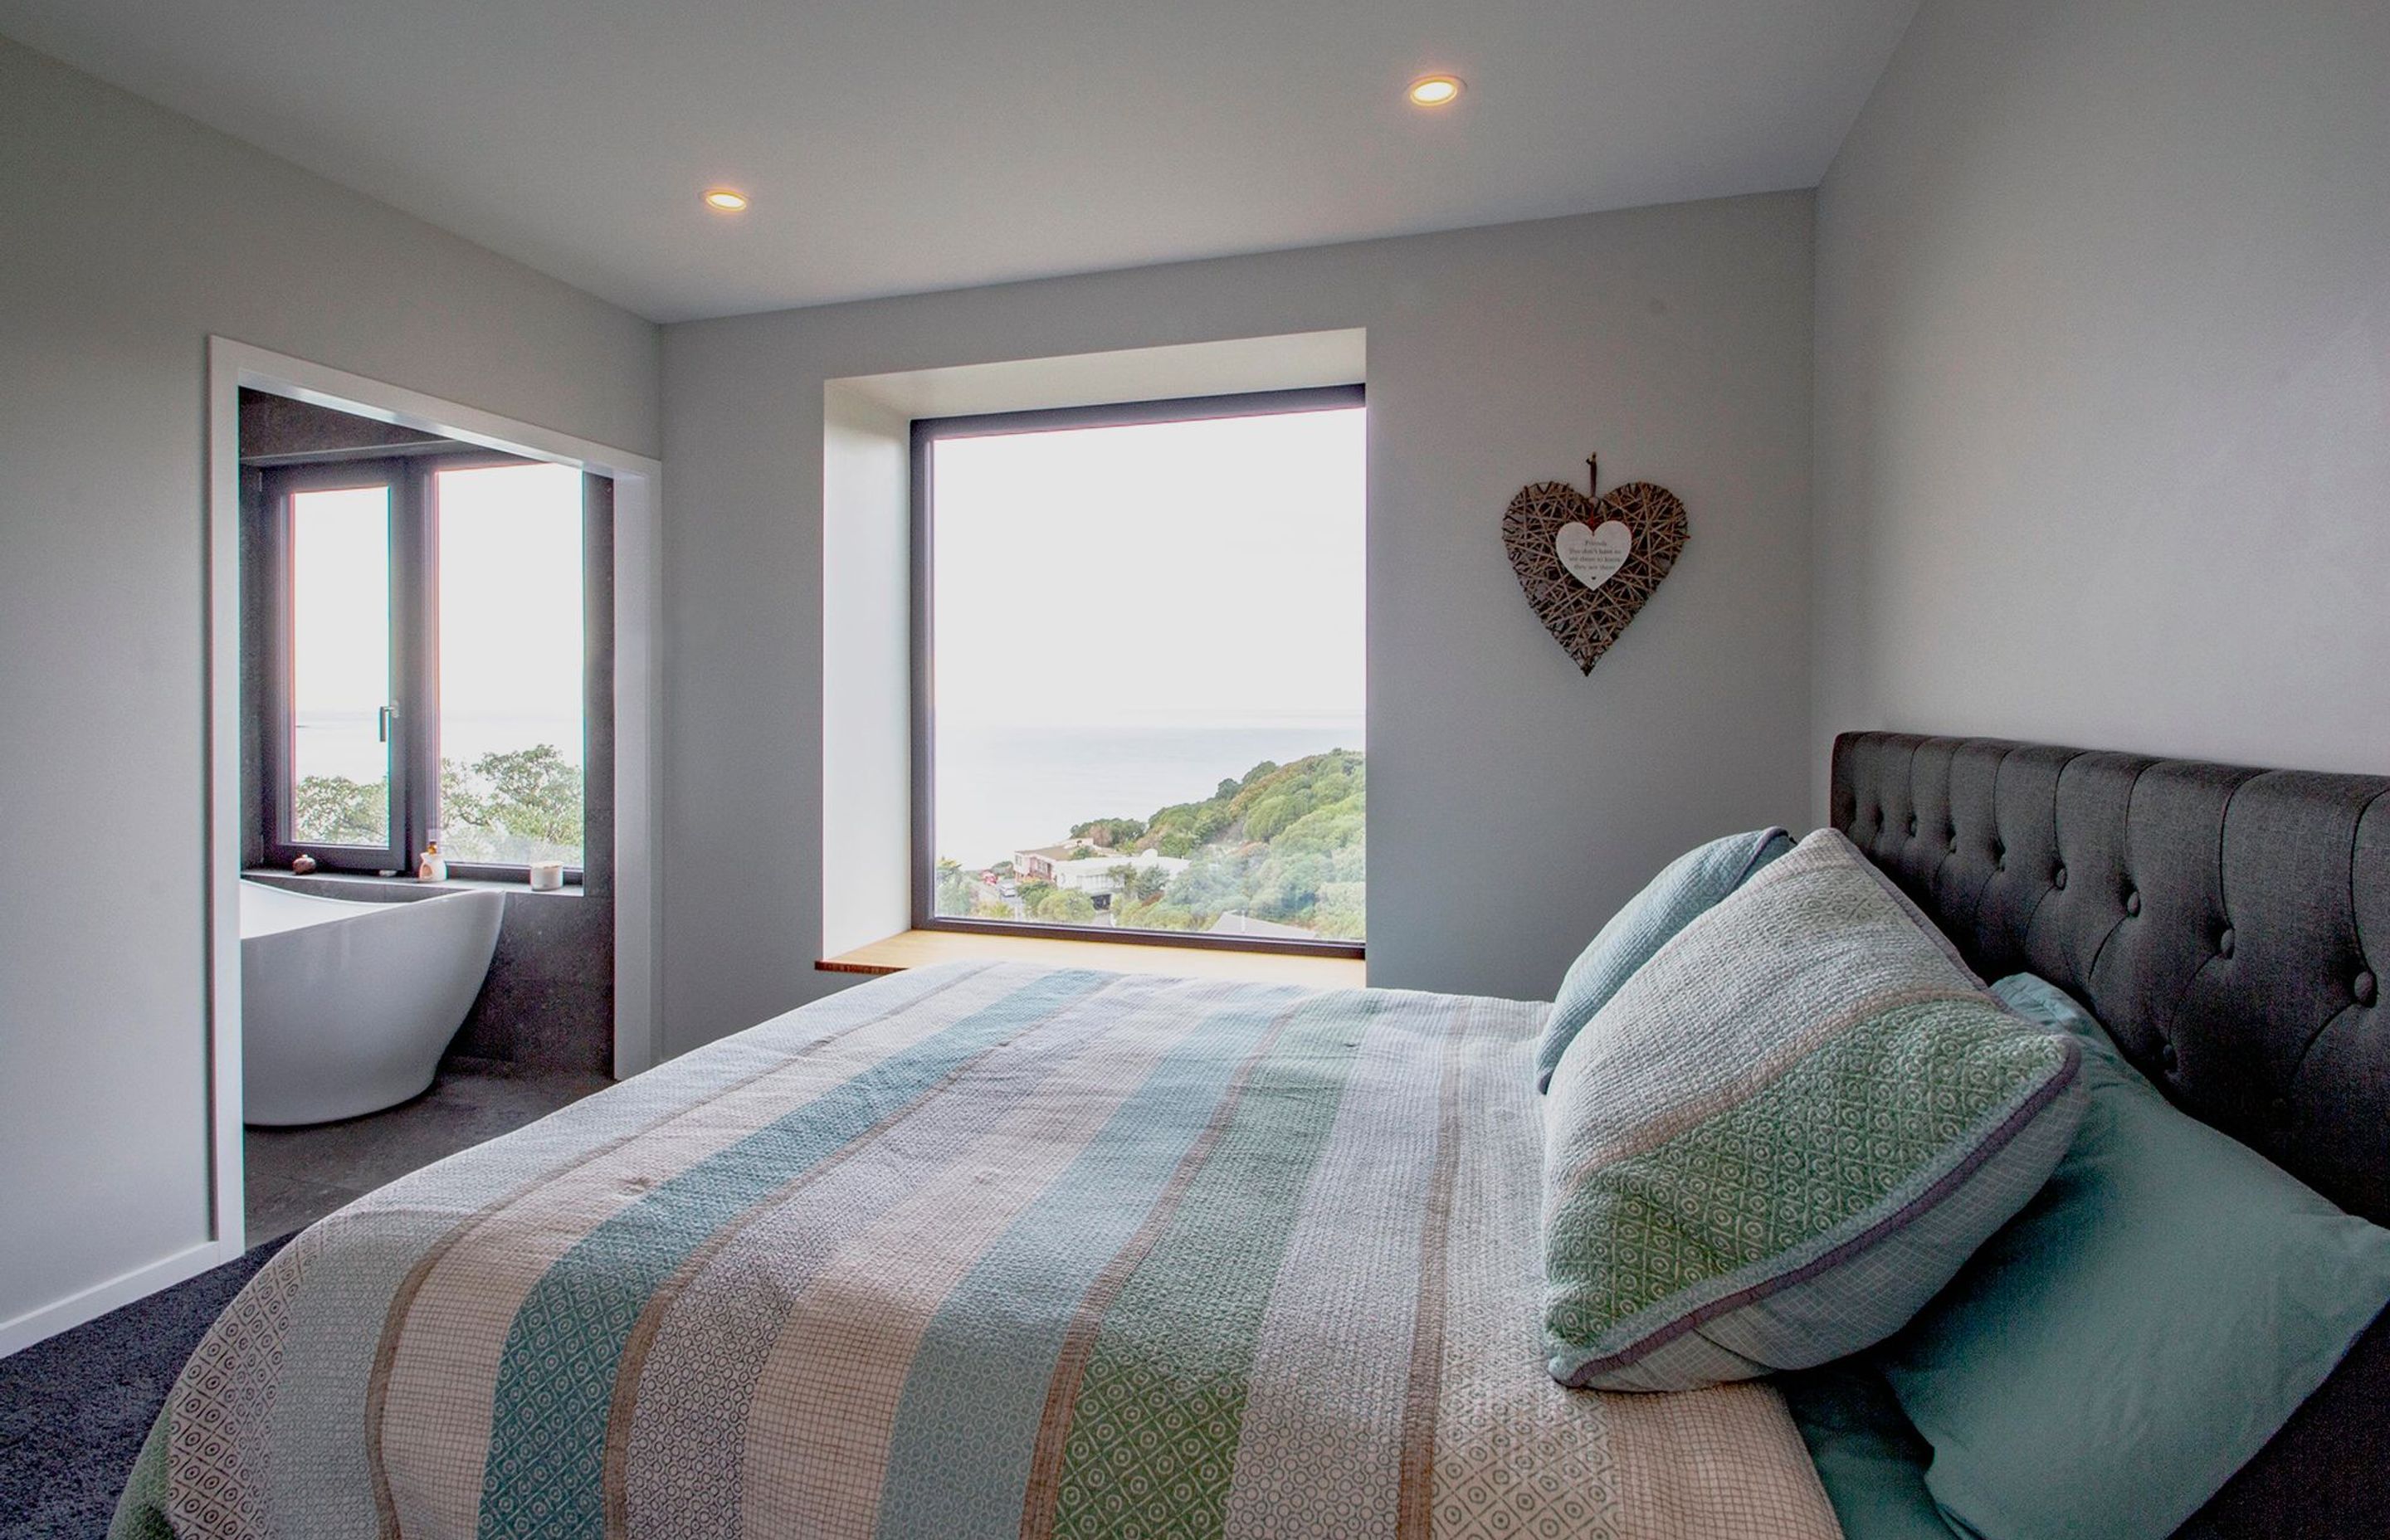 The master bedroom enjoys views over St Clair beach.